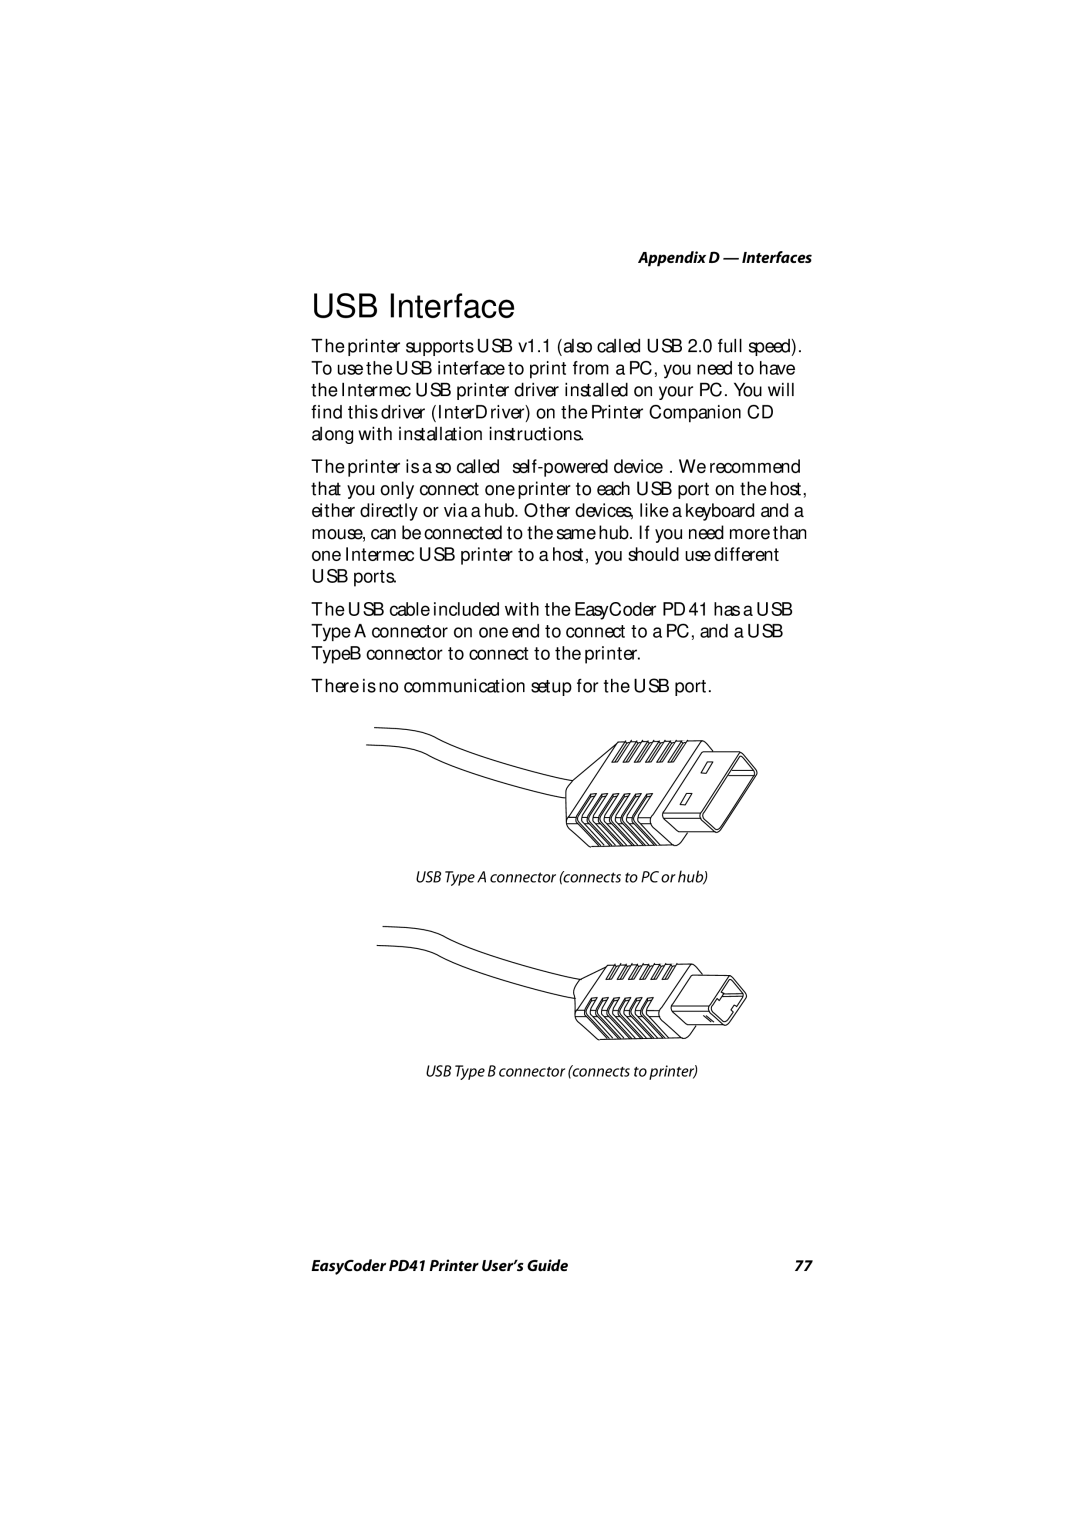 Intermec PD41 manual USB Interface 